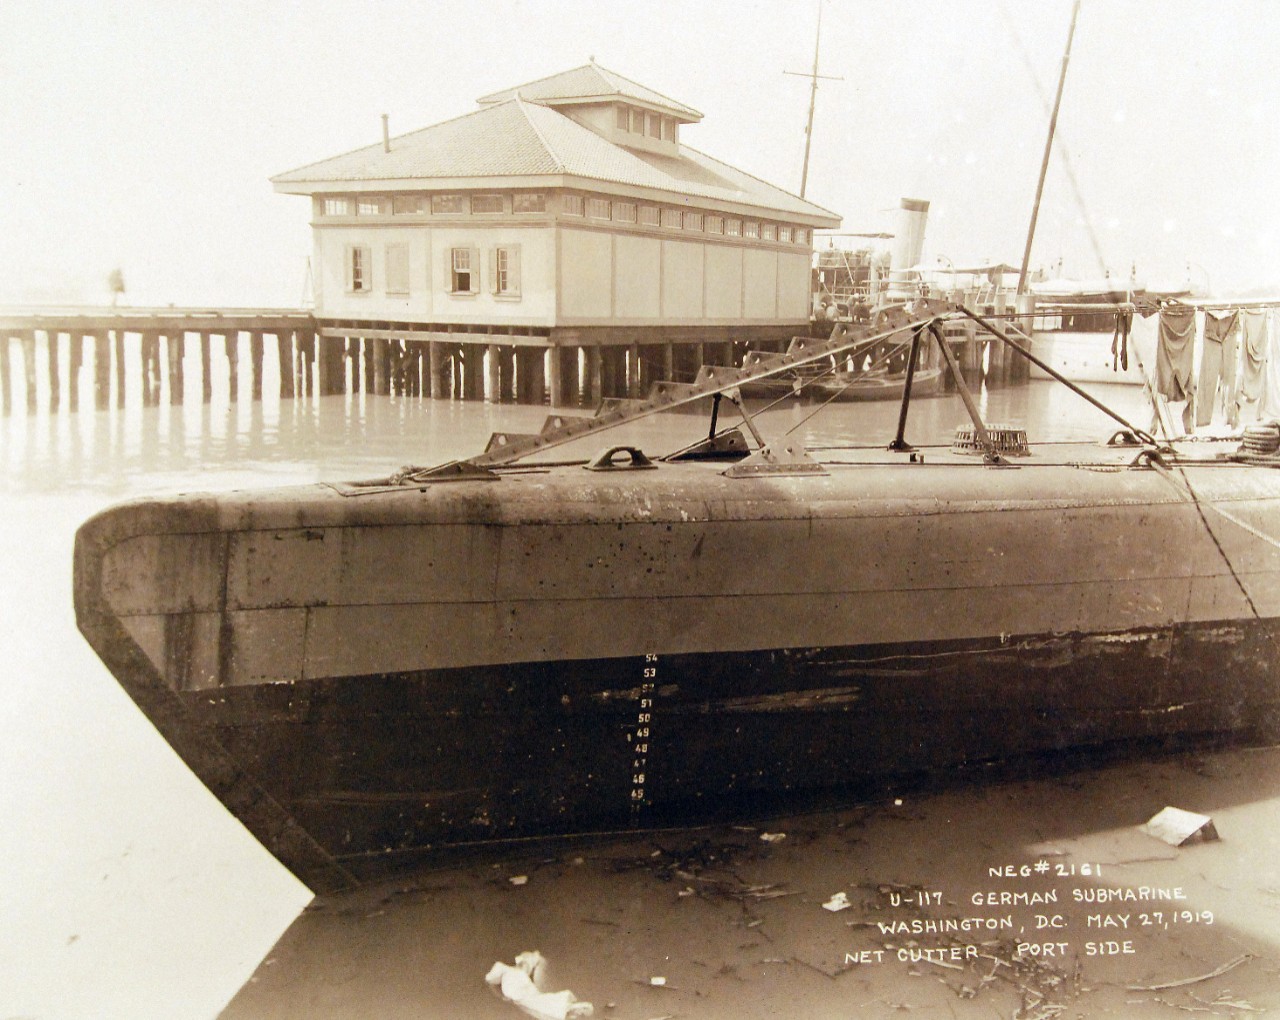 <p>19-N-2161: German submarine, U-117, showing net cutter, port side, May 27, 1919.&nbsp;</p>
